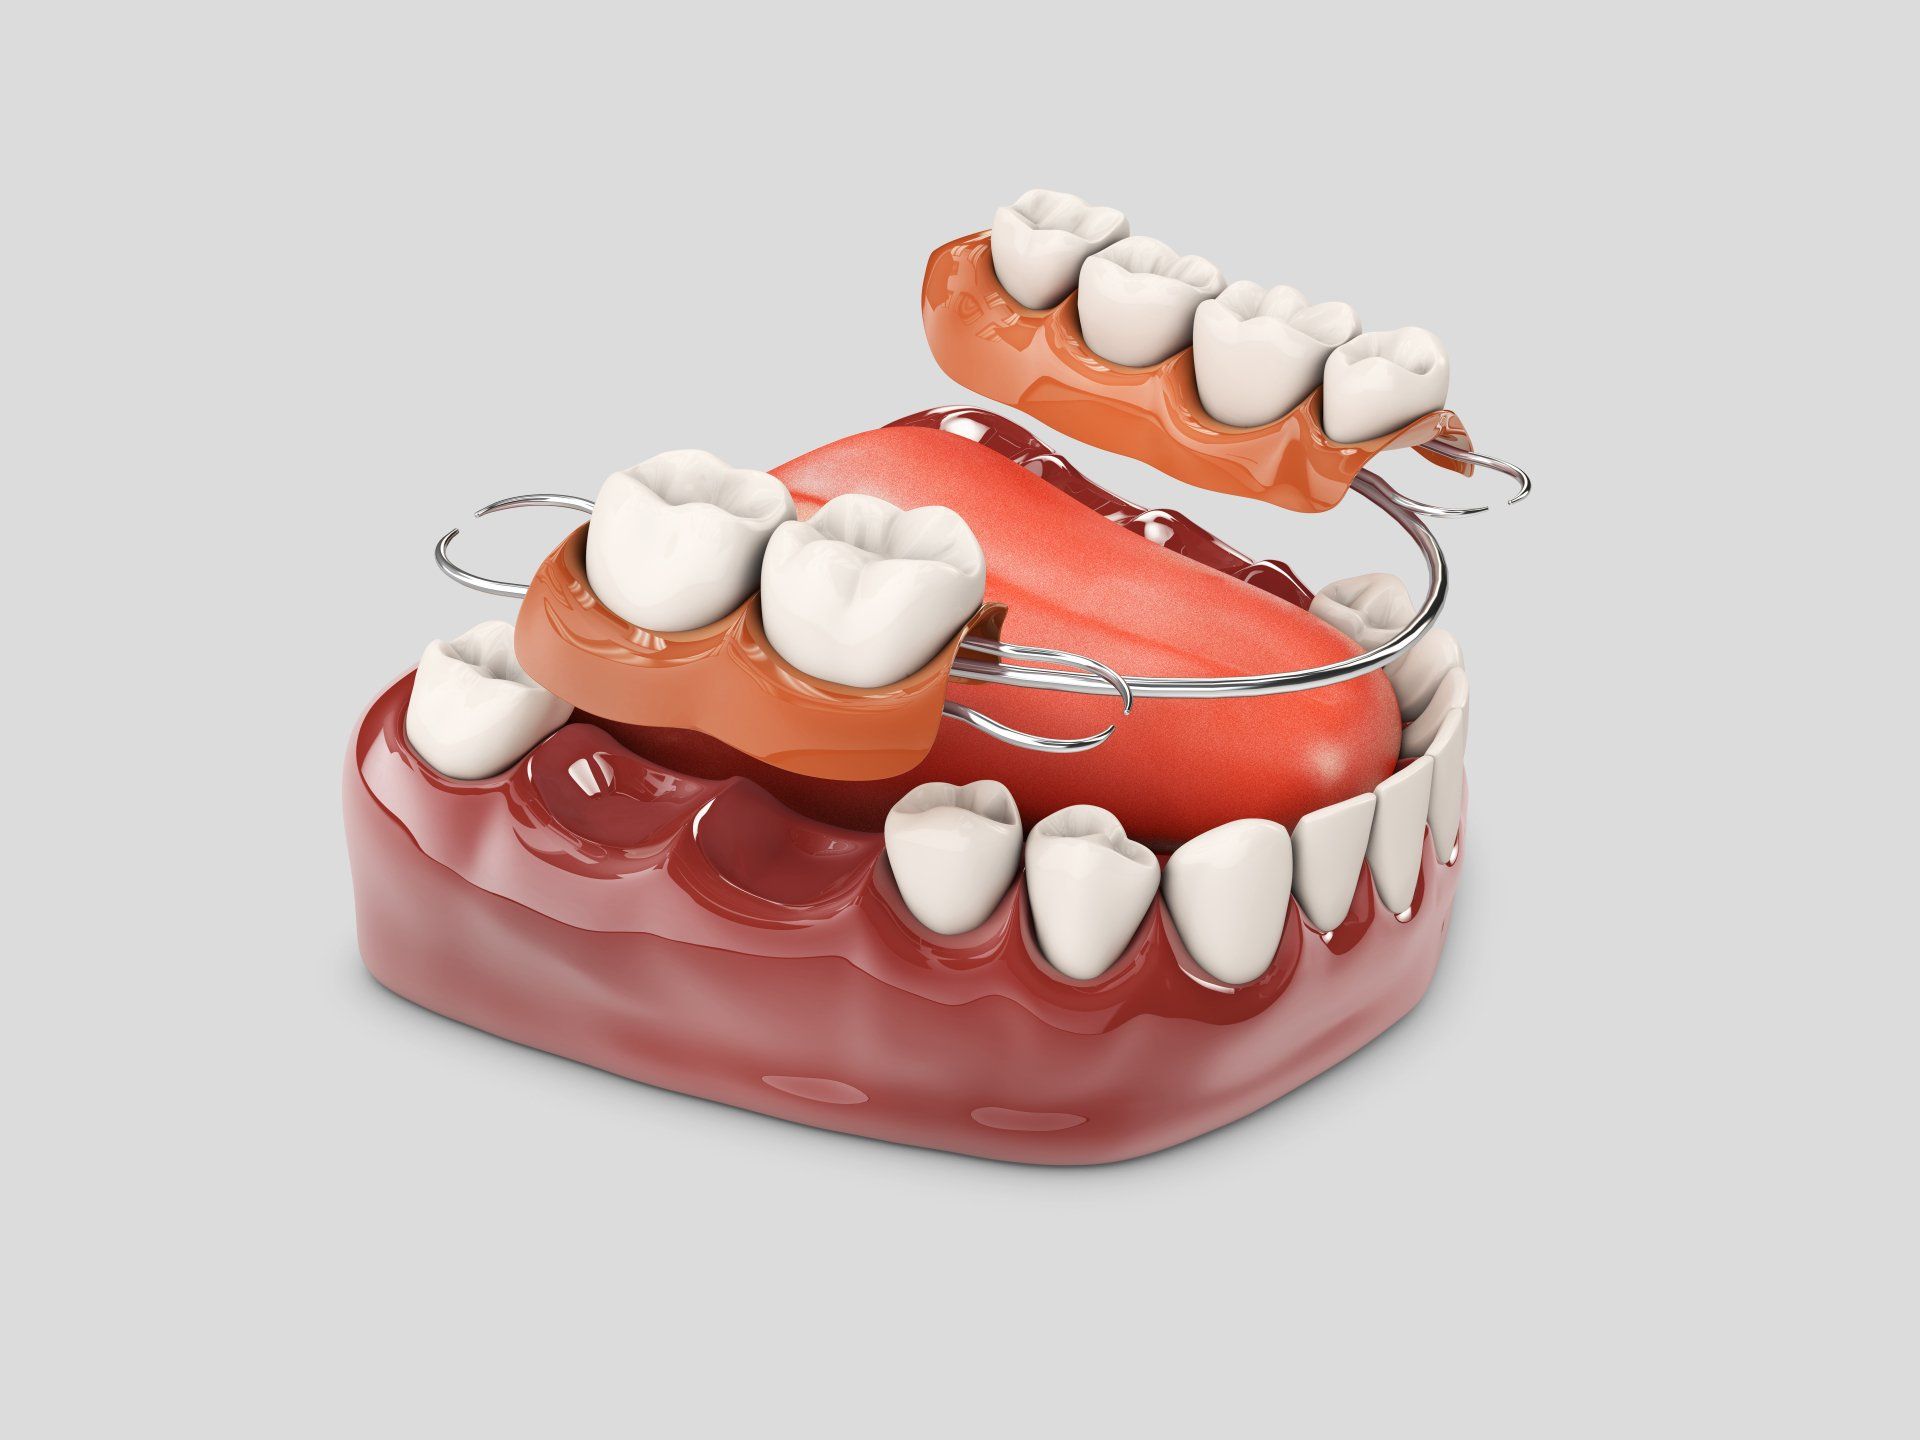 partial dentures model